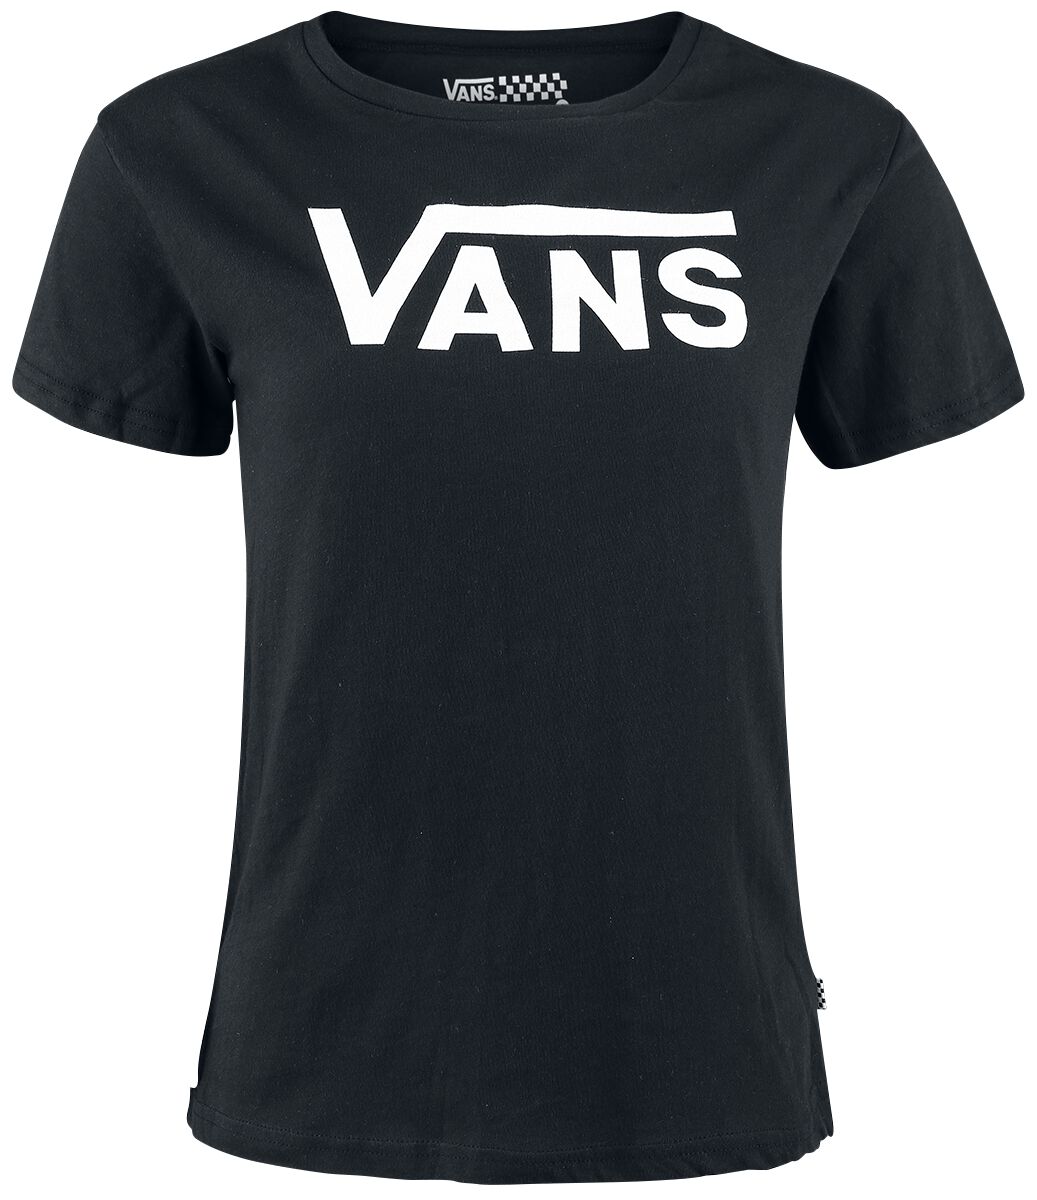 Image of T-Shirt di Vans - Flying V Crew - XS a XL - Donna - nero